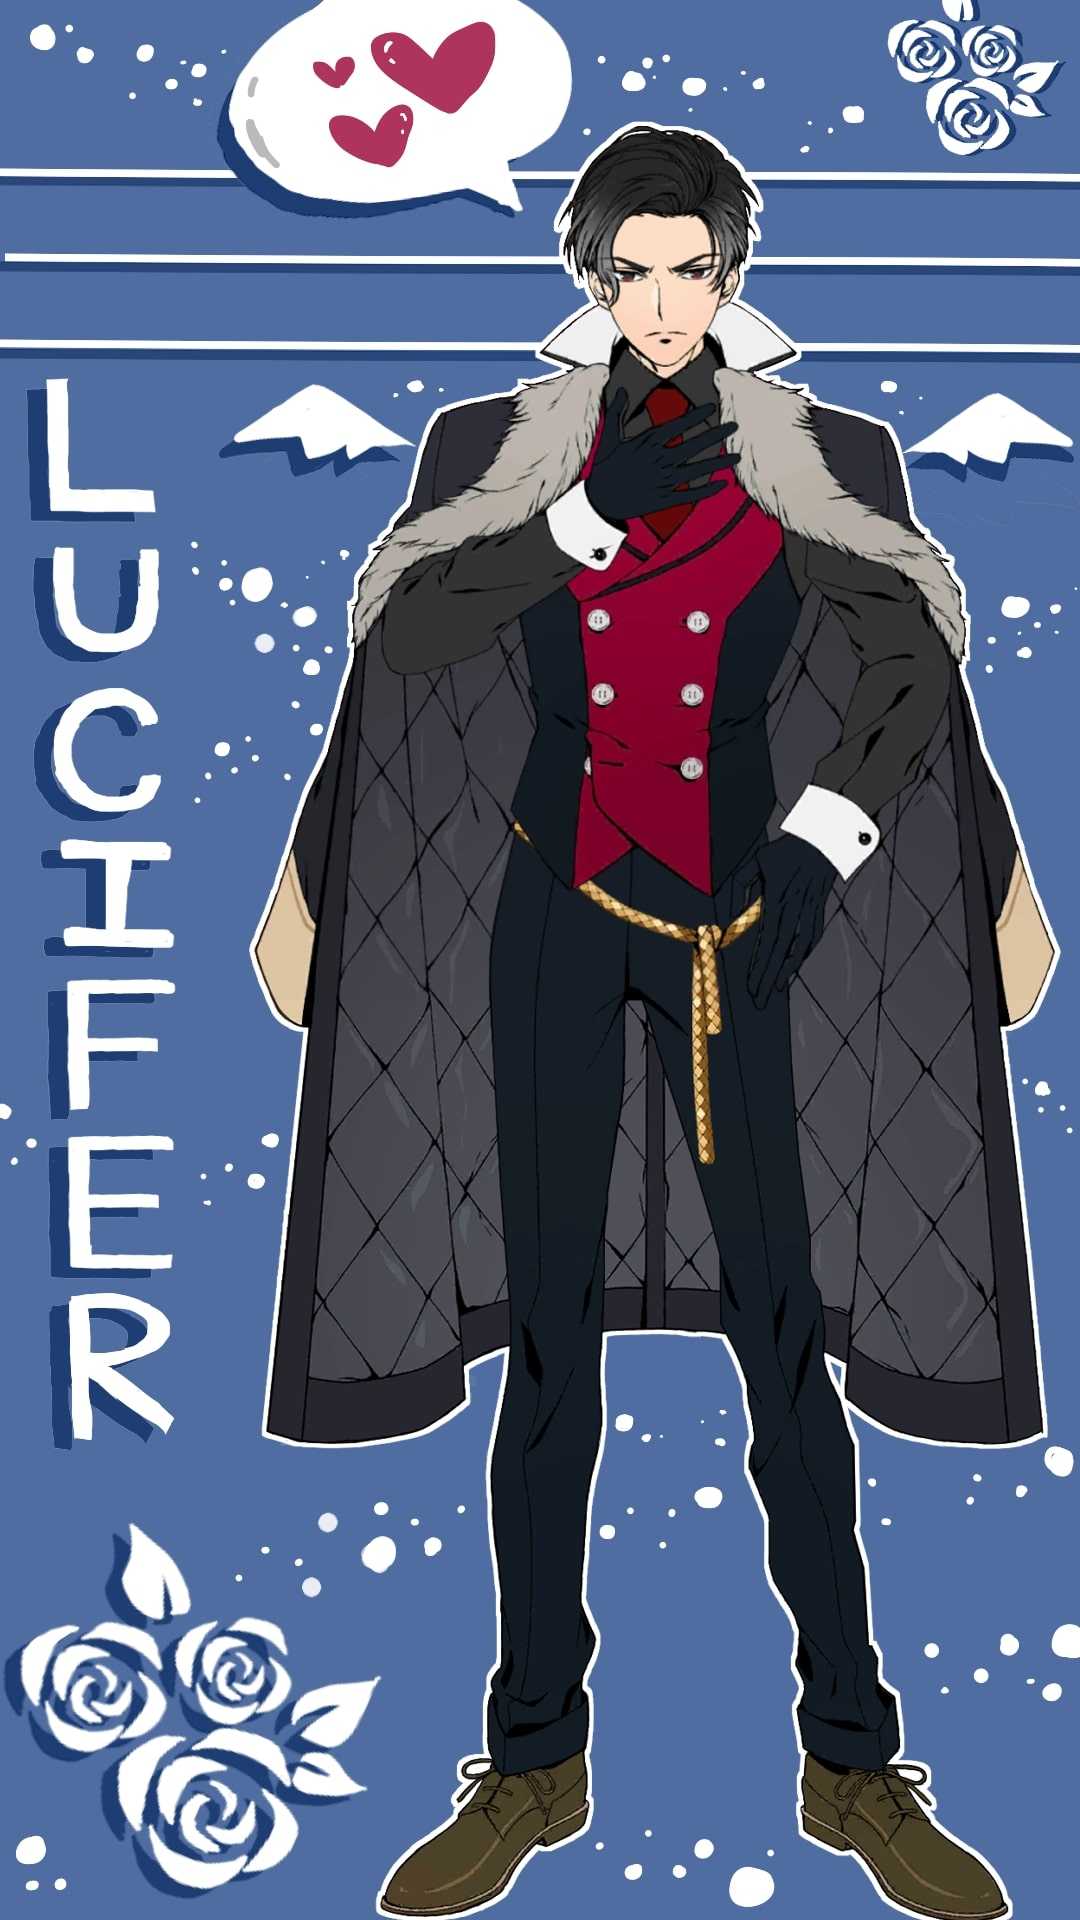 Lucifer Morningstar and Chloe Decker anime version by EliohRxH on DeviantArt